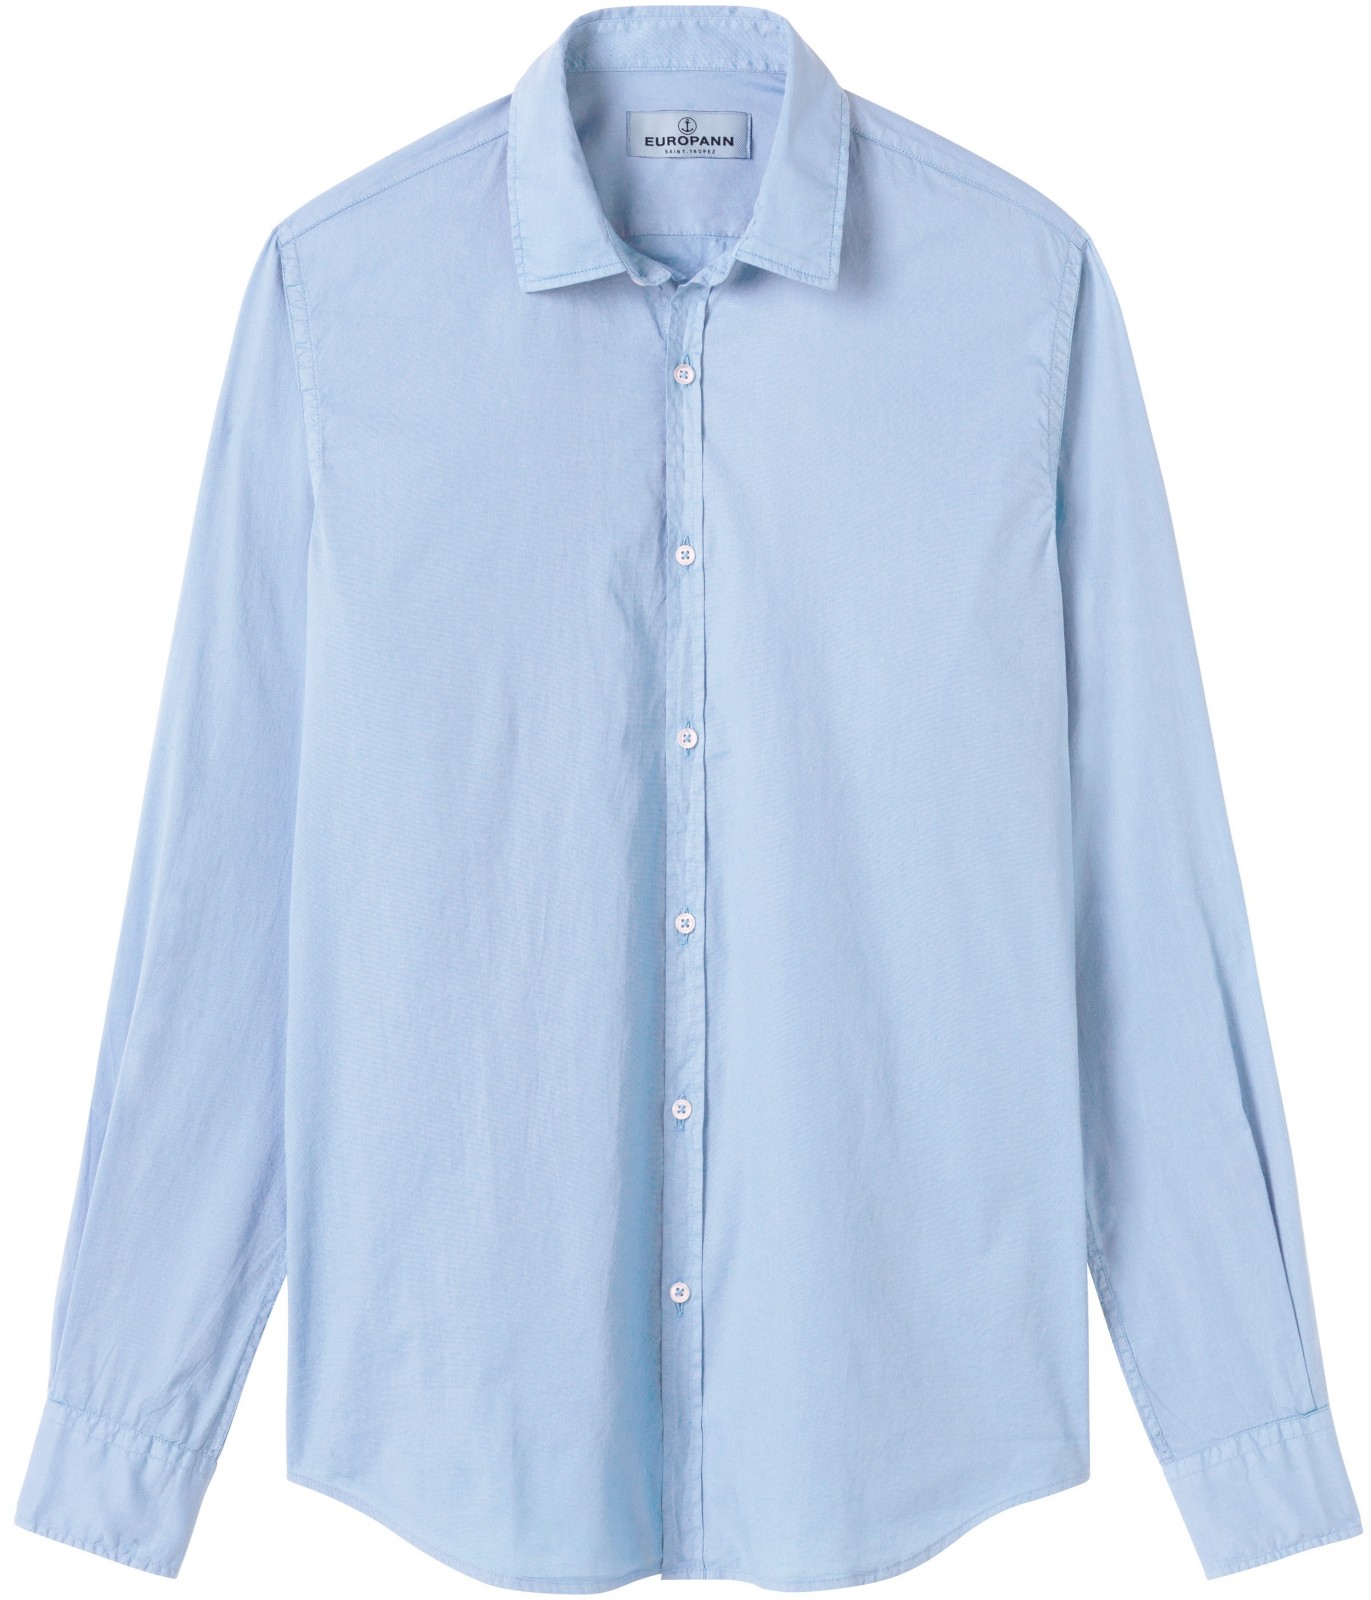 Plain sky blue color long sleeves shirt 